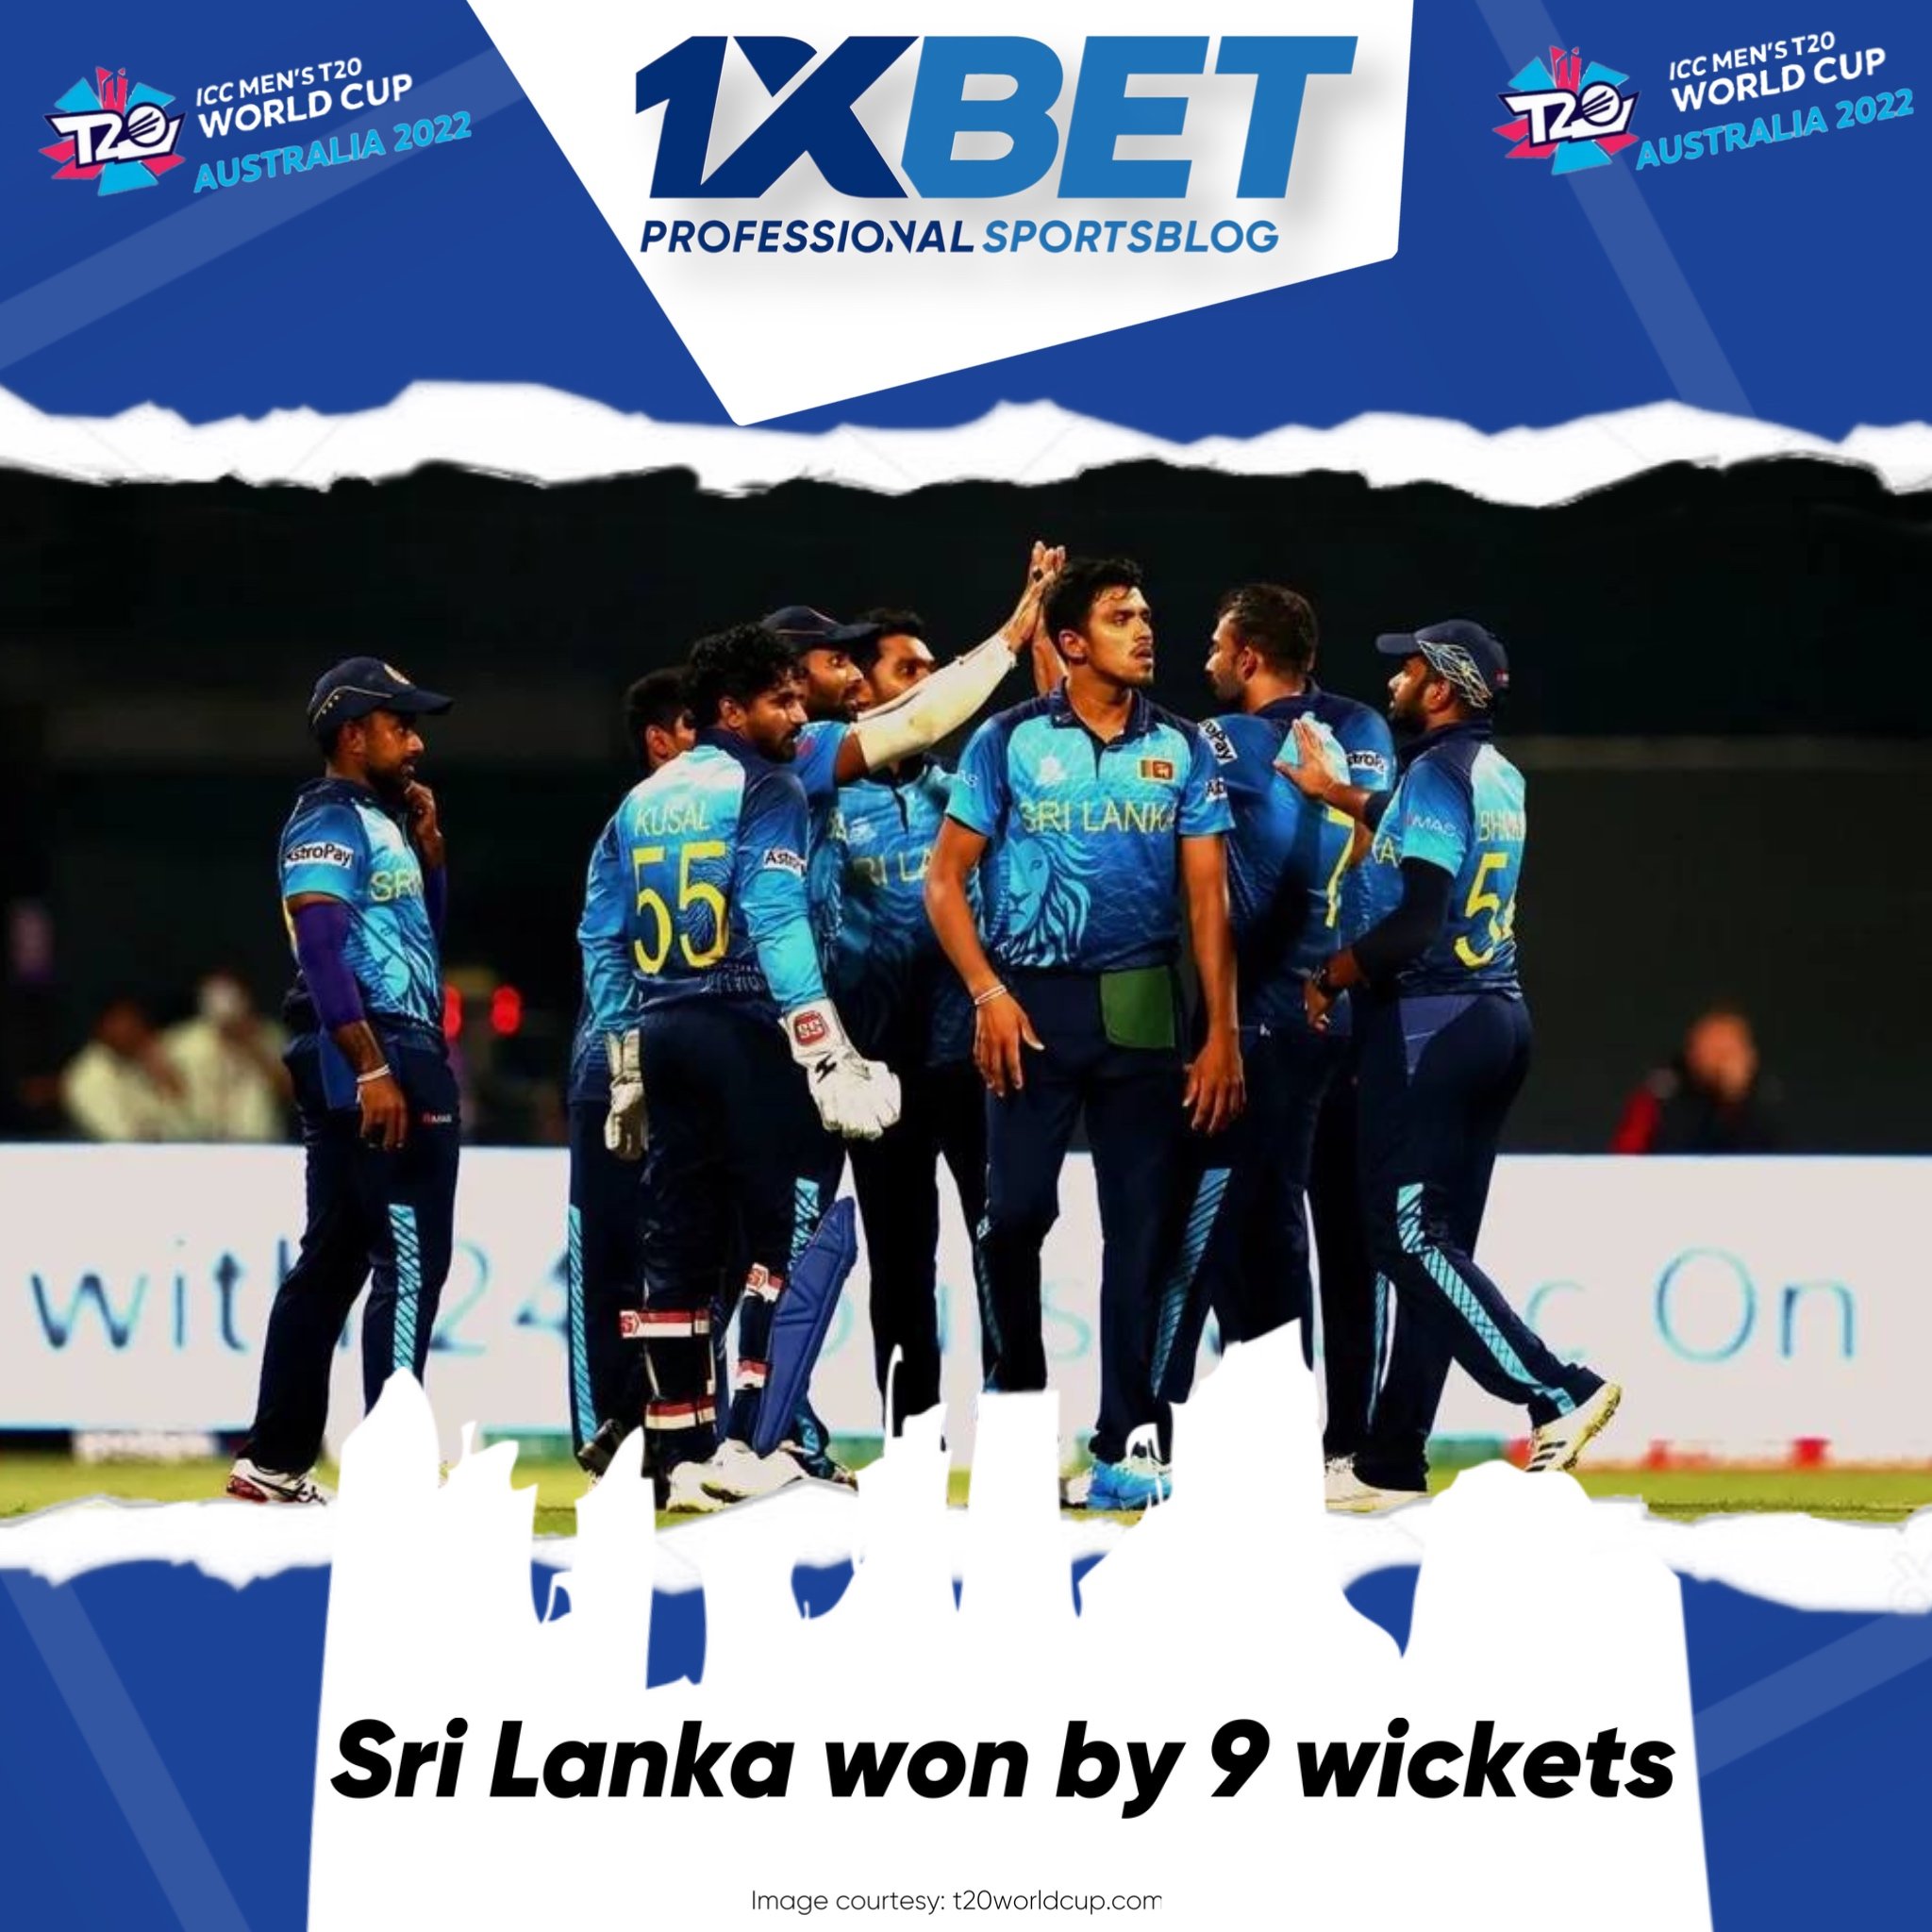 Sri Lanka won by 9 wickets